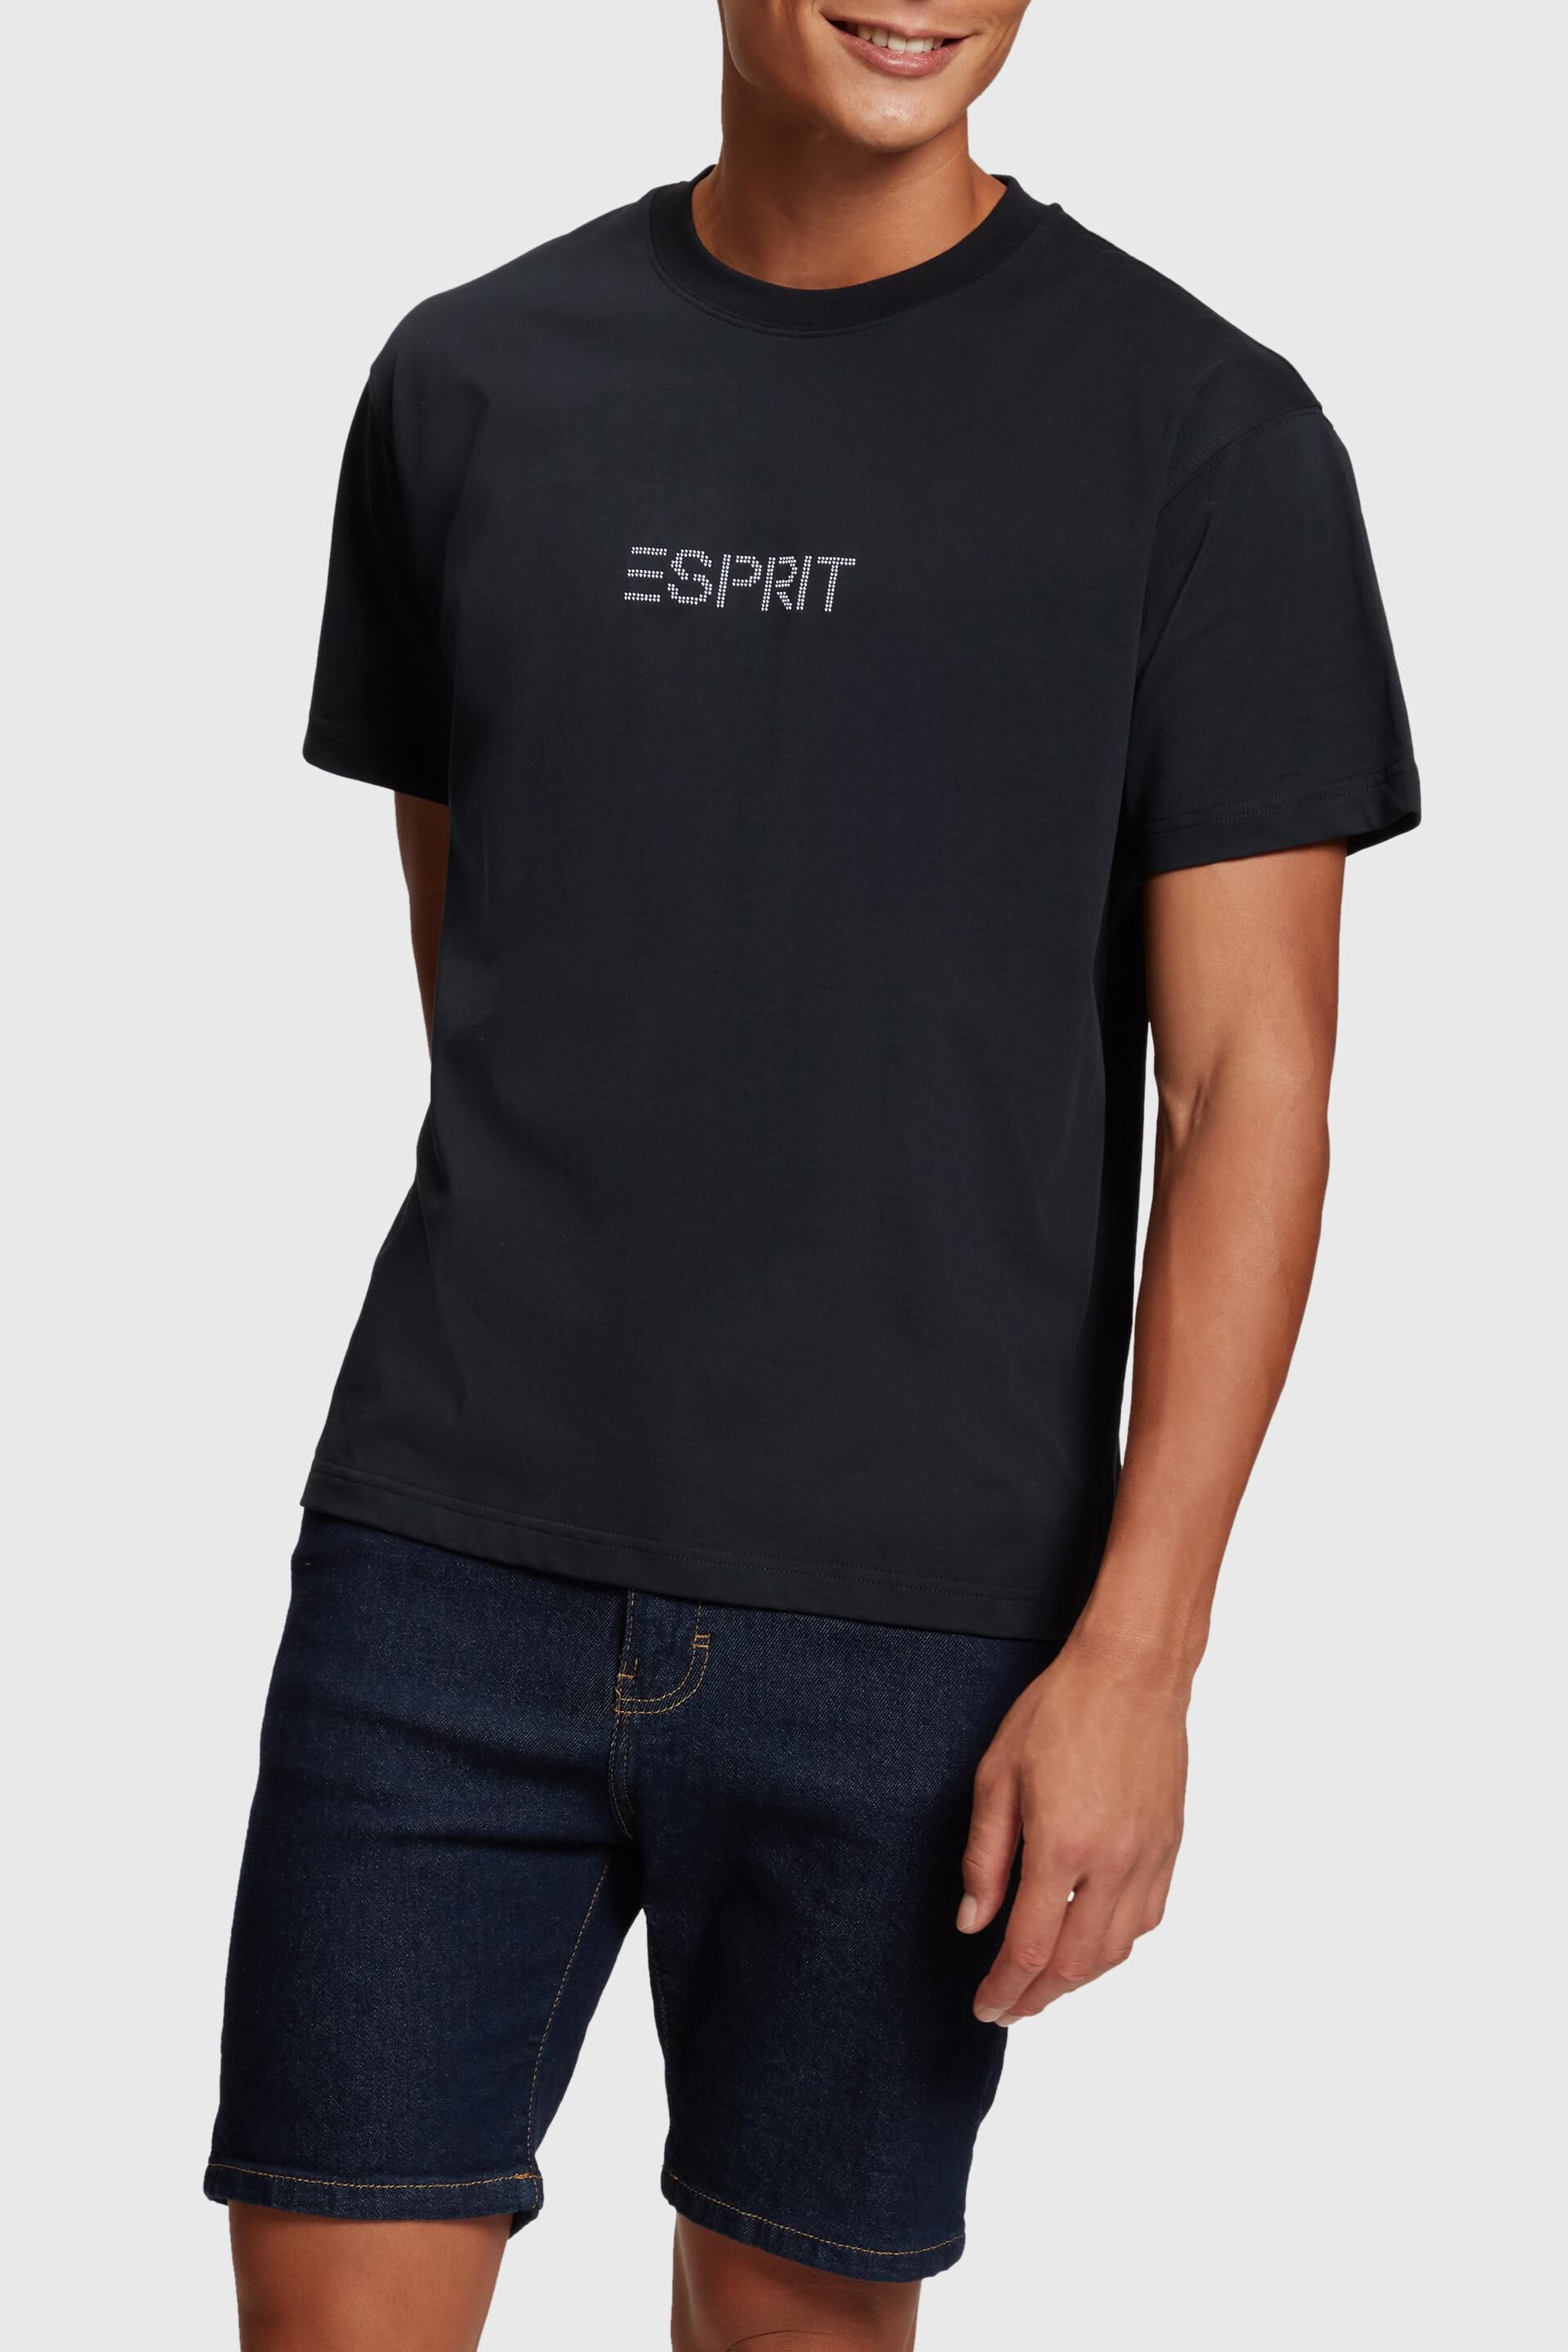 Esprit applique Stud t-shirt logo